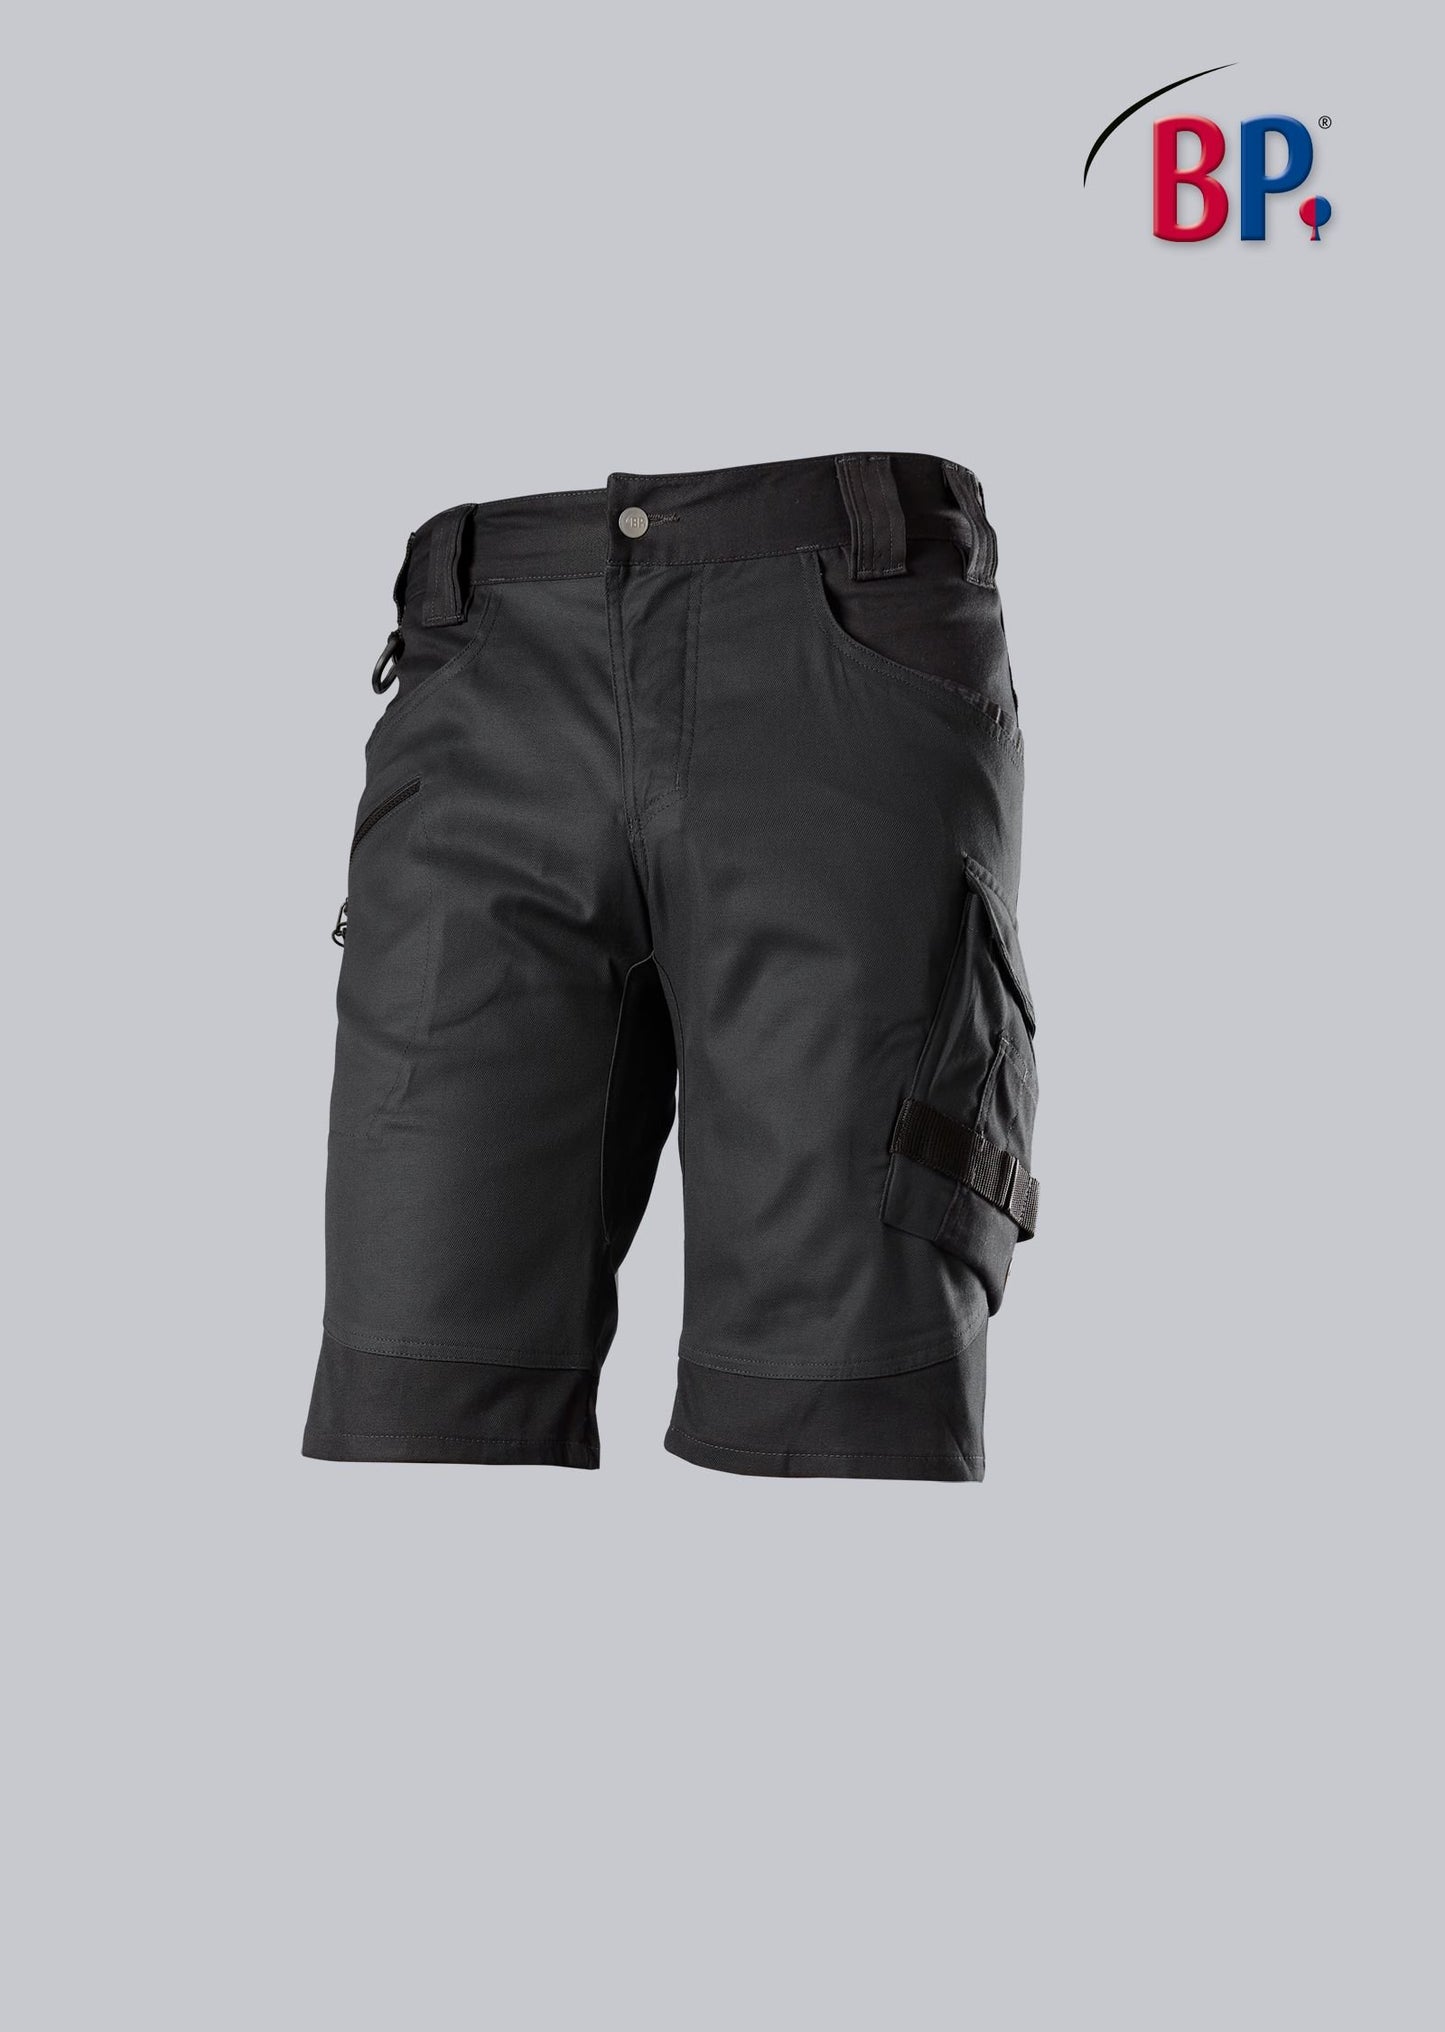 BP® Leichte Stretch-Shorts